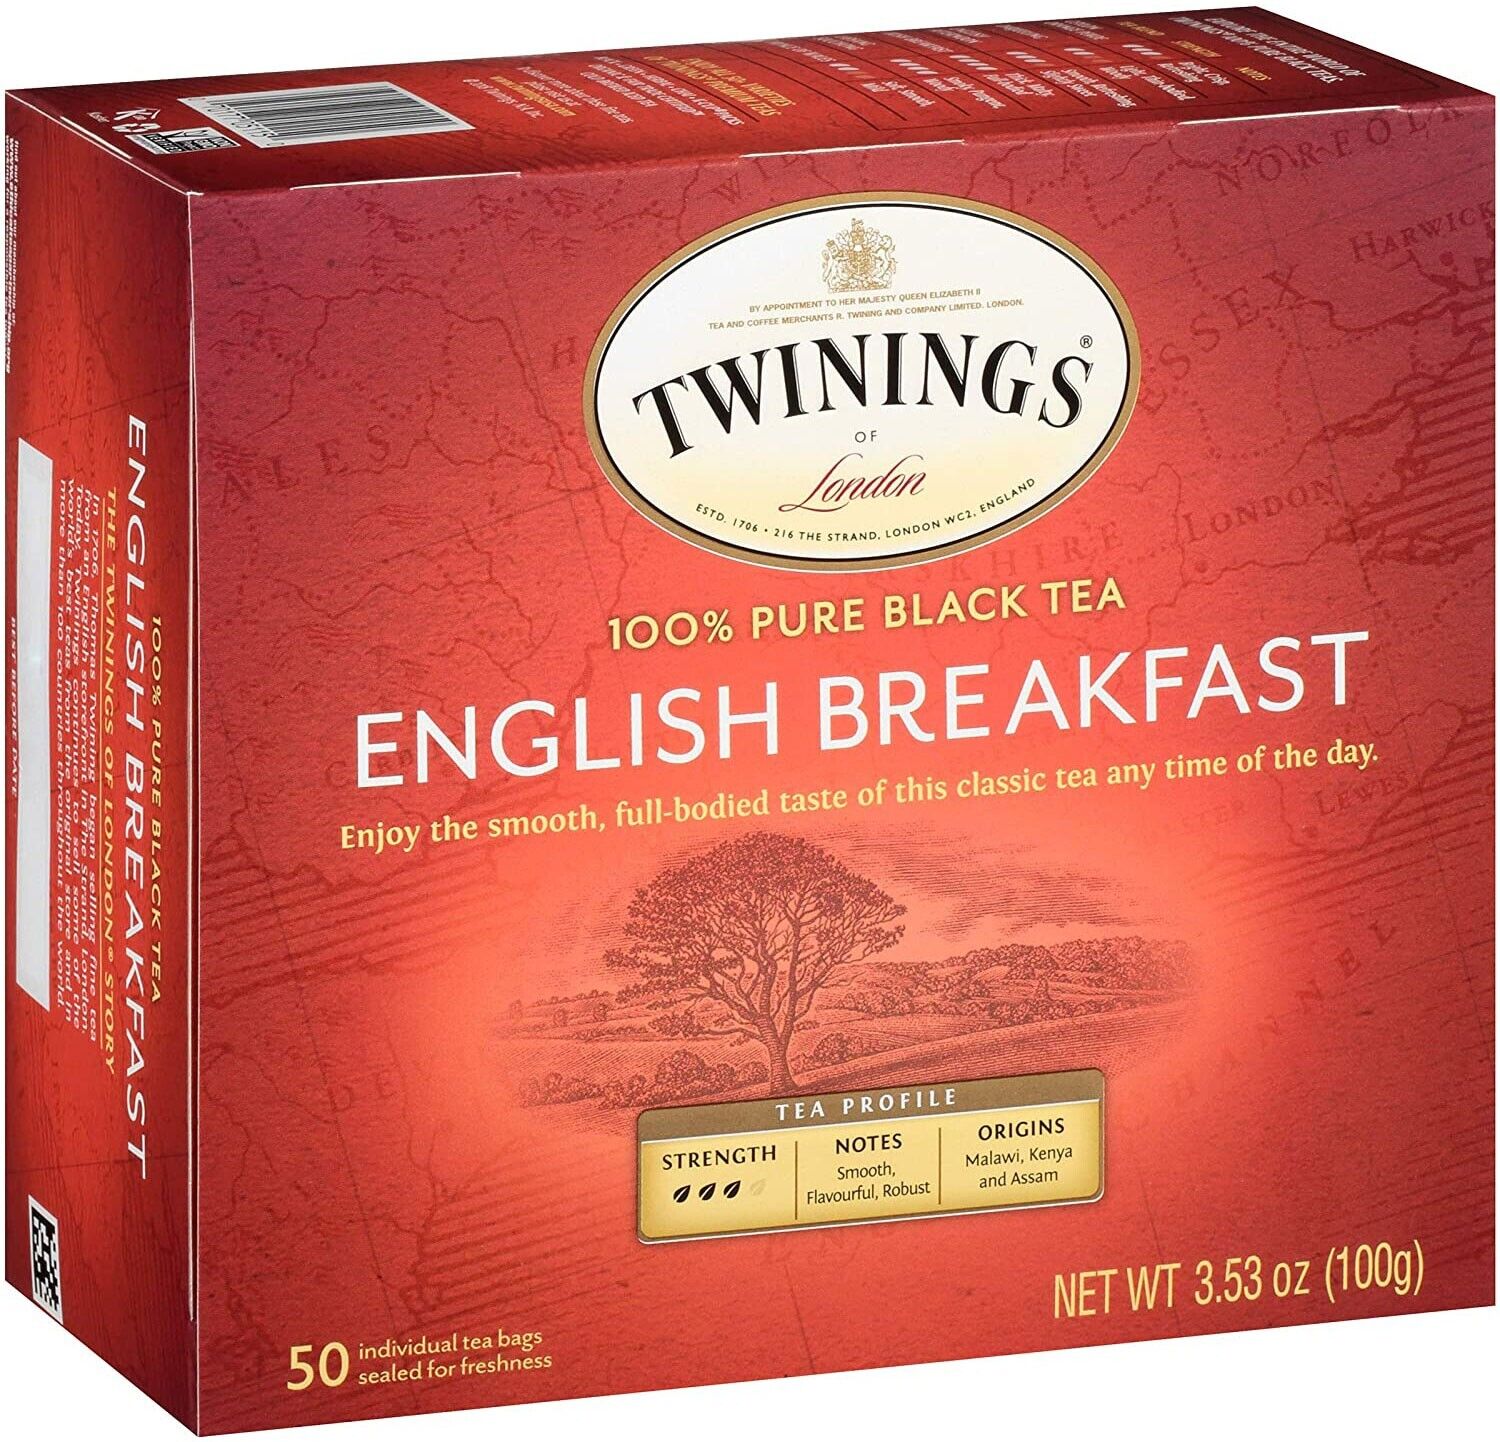 Twinings English Breakfast Pure Black Tea - 50 bags